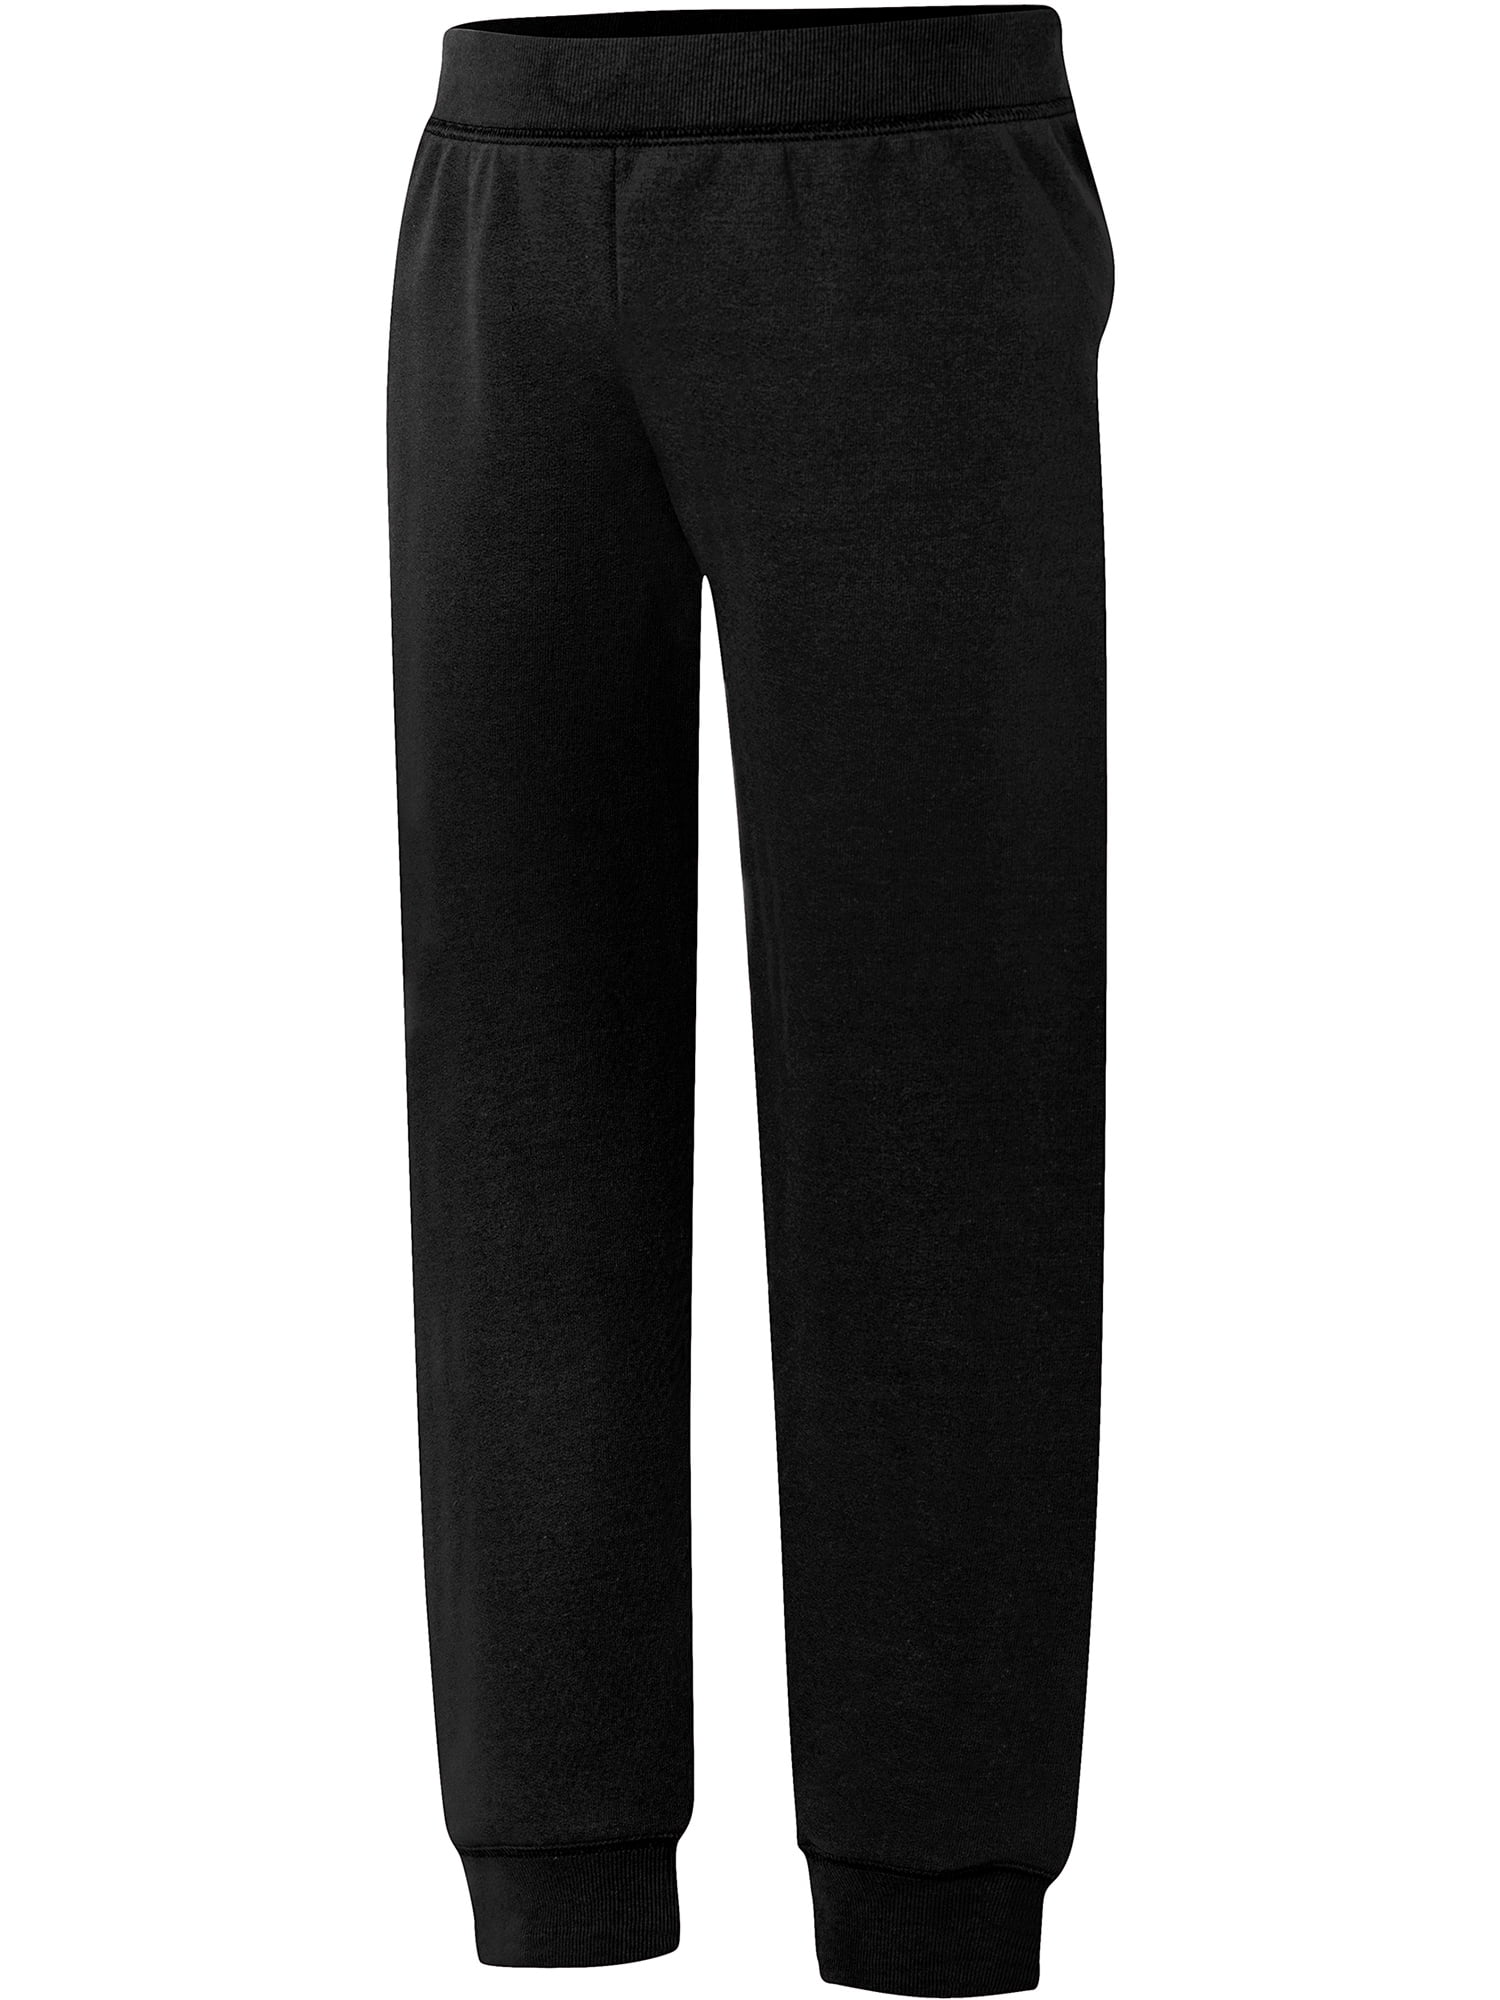 Hanes Women's Black Ecosmart Fleece Sweatpants Size 12-14 Large